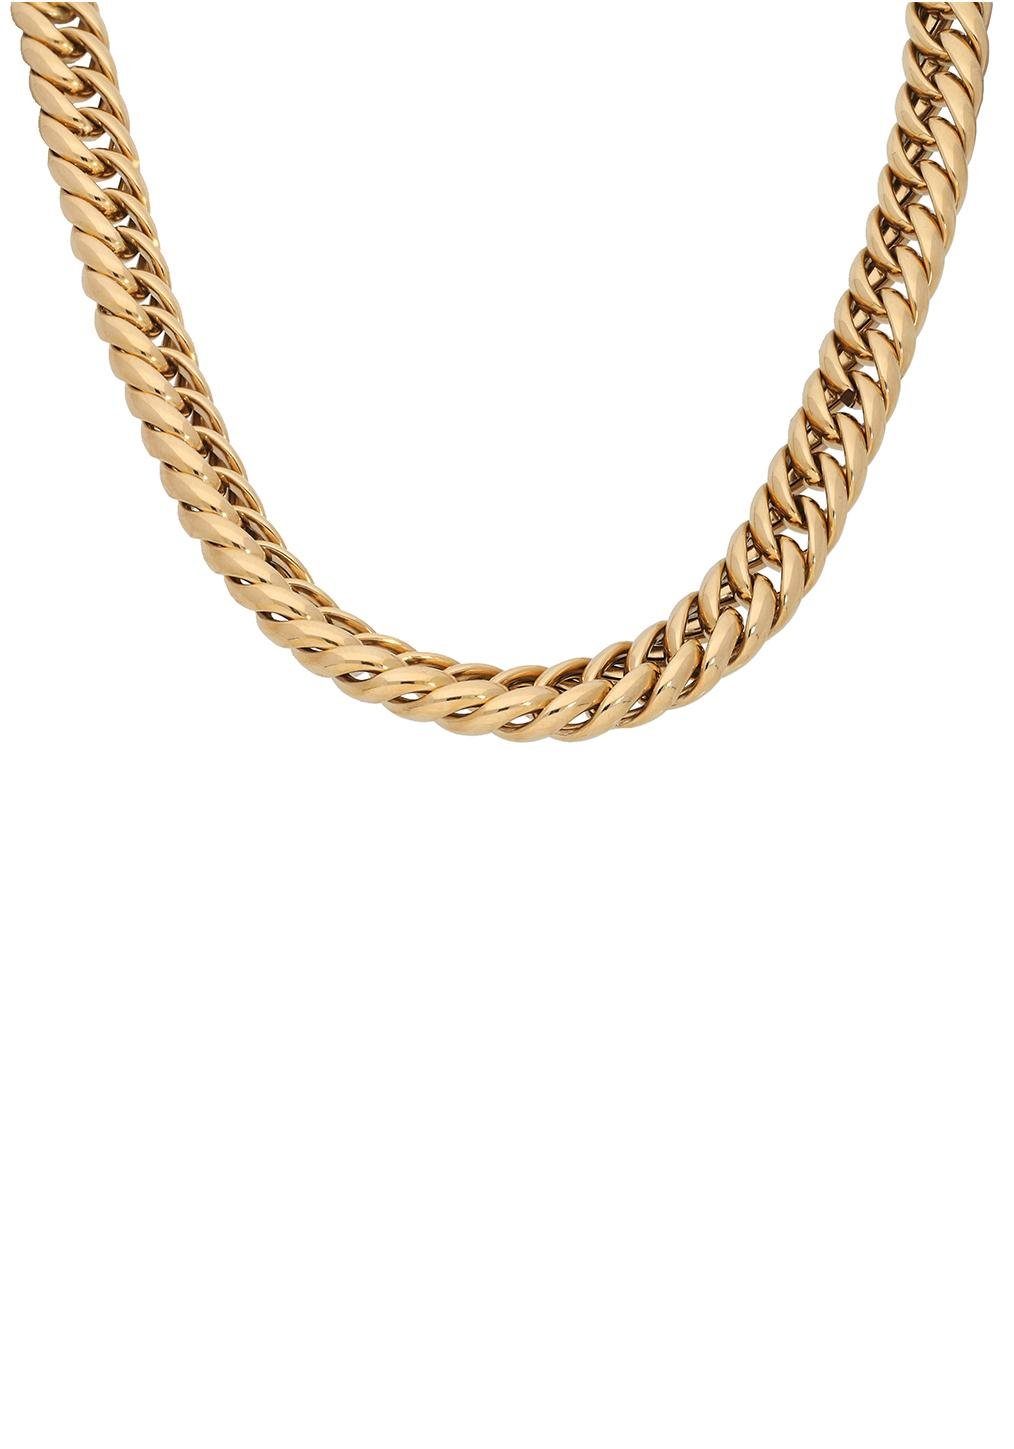 Firetti Goldkette Schmuck Geschenk Gold 375 Halsschmuck Halskette Goldkette Panzerkette, zu Kleid, Shirt, Jeans, Sneaker! Anlass Geburtstag Weihnachten